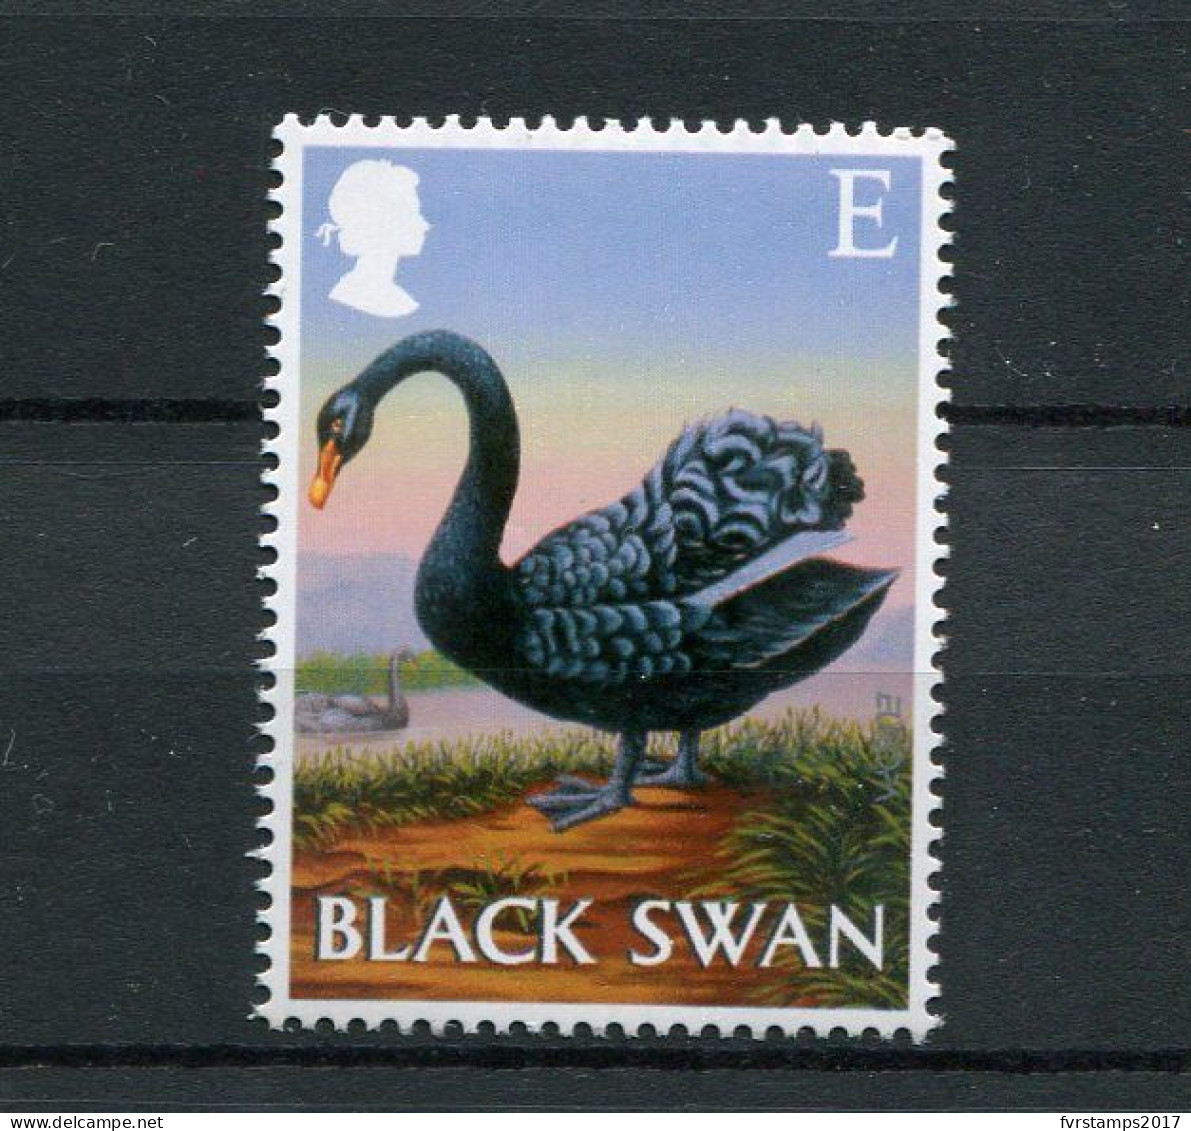 UK Great Britain - 2003 - Mi 2148 - MNH ** - Black Swan - Birds Vogels Oiseaux Fauna - Zwanen